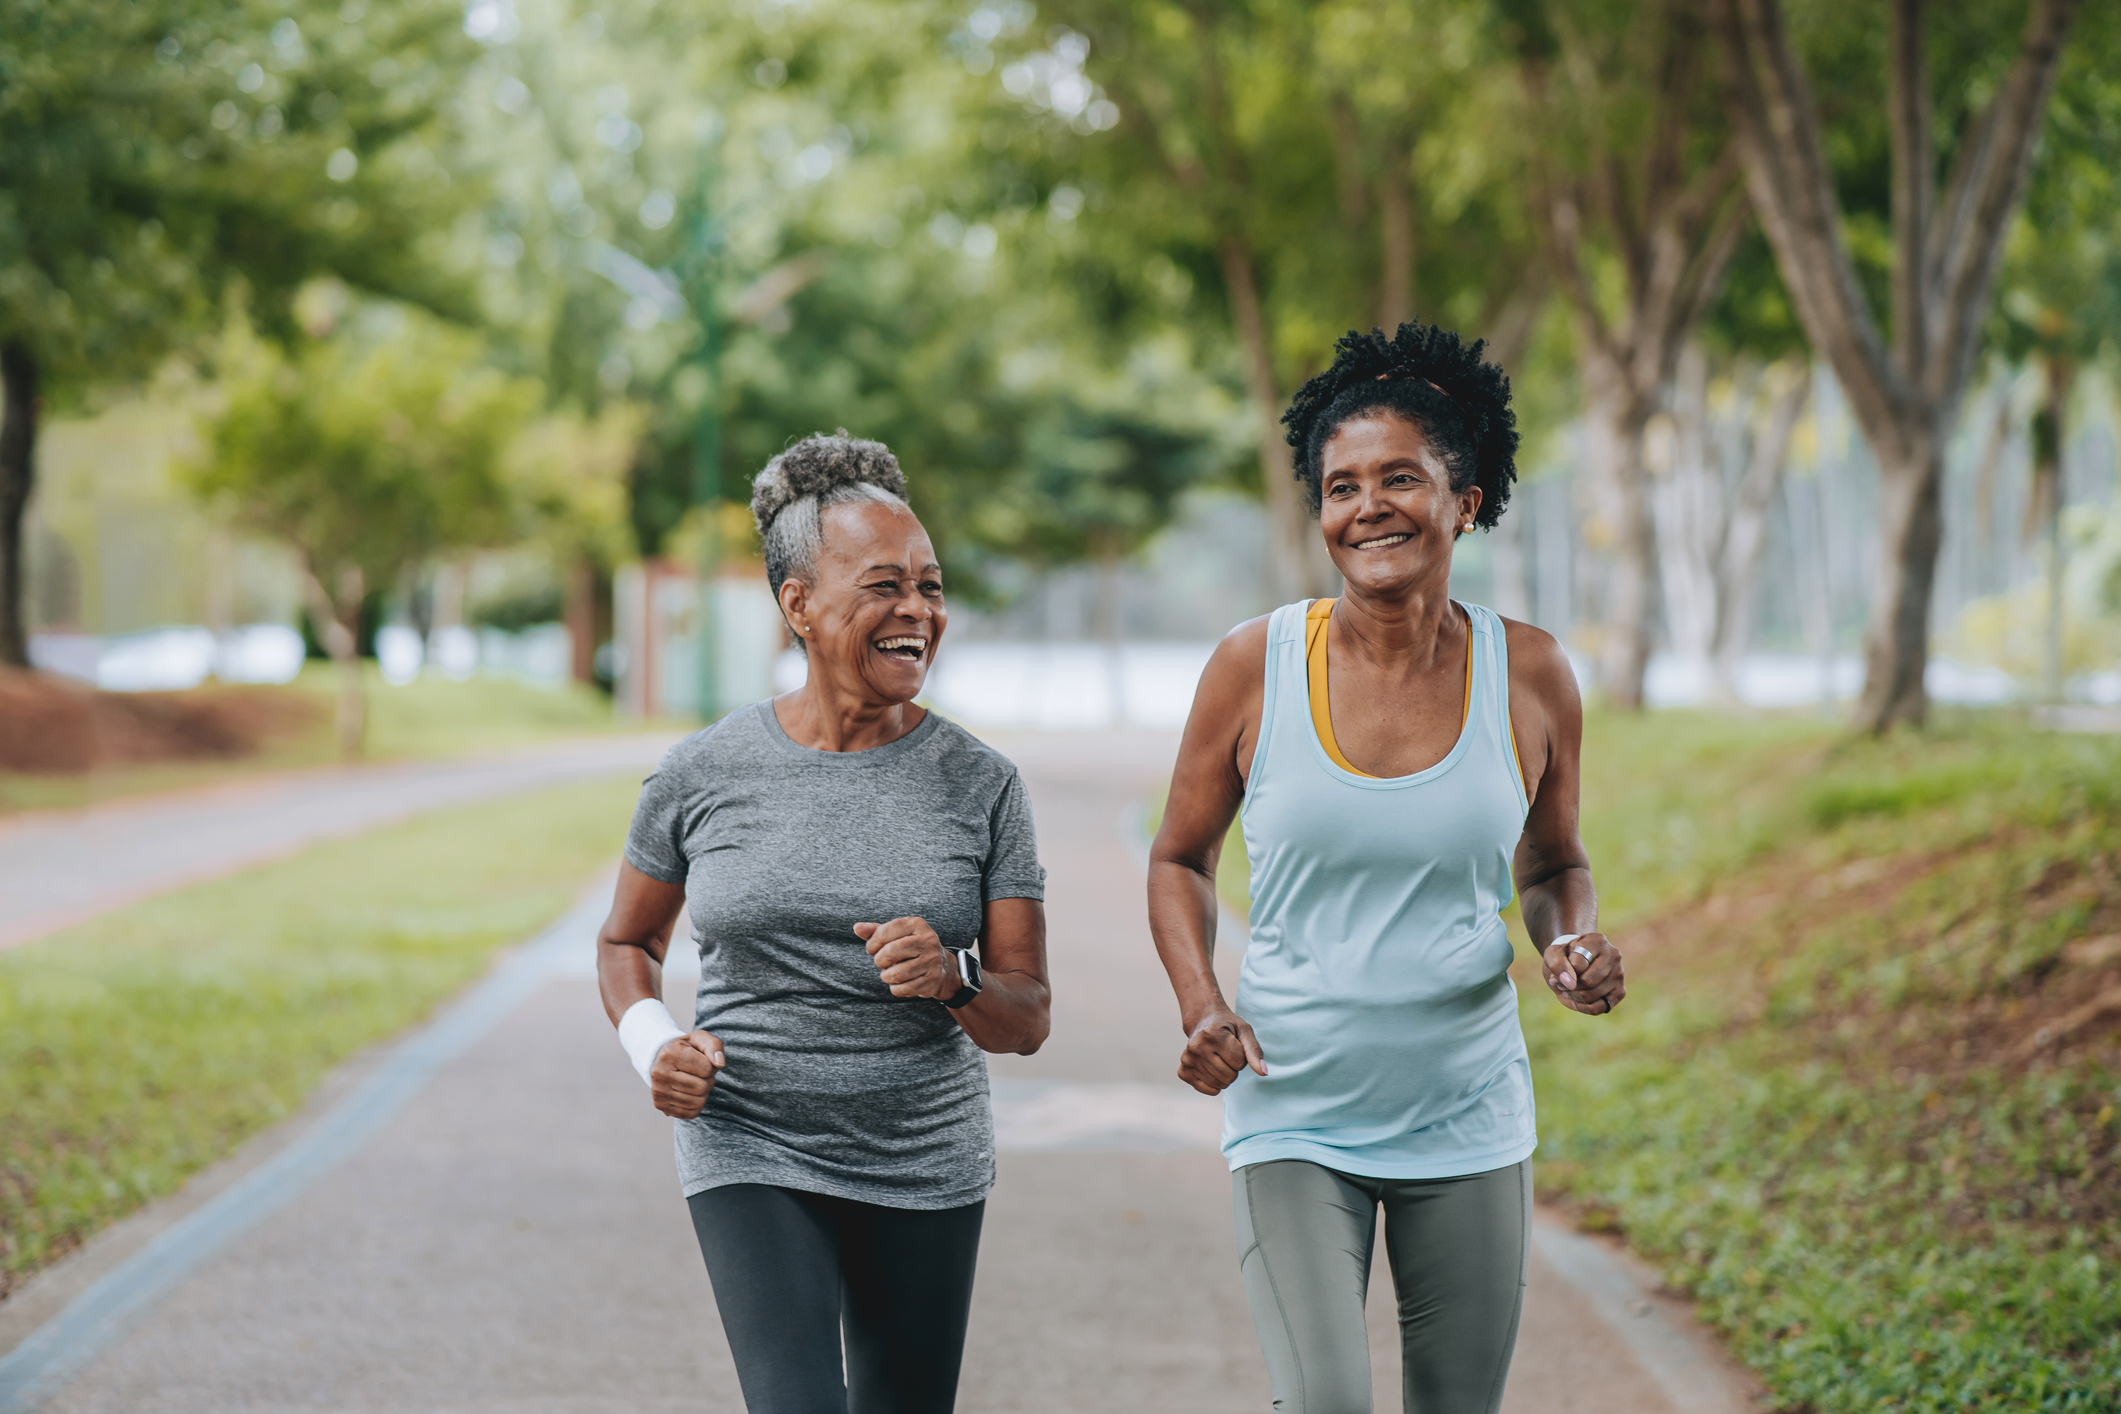 Two older women jogging together in a park